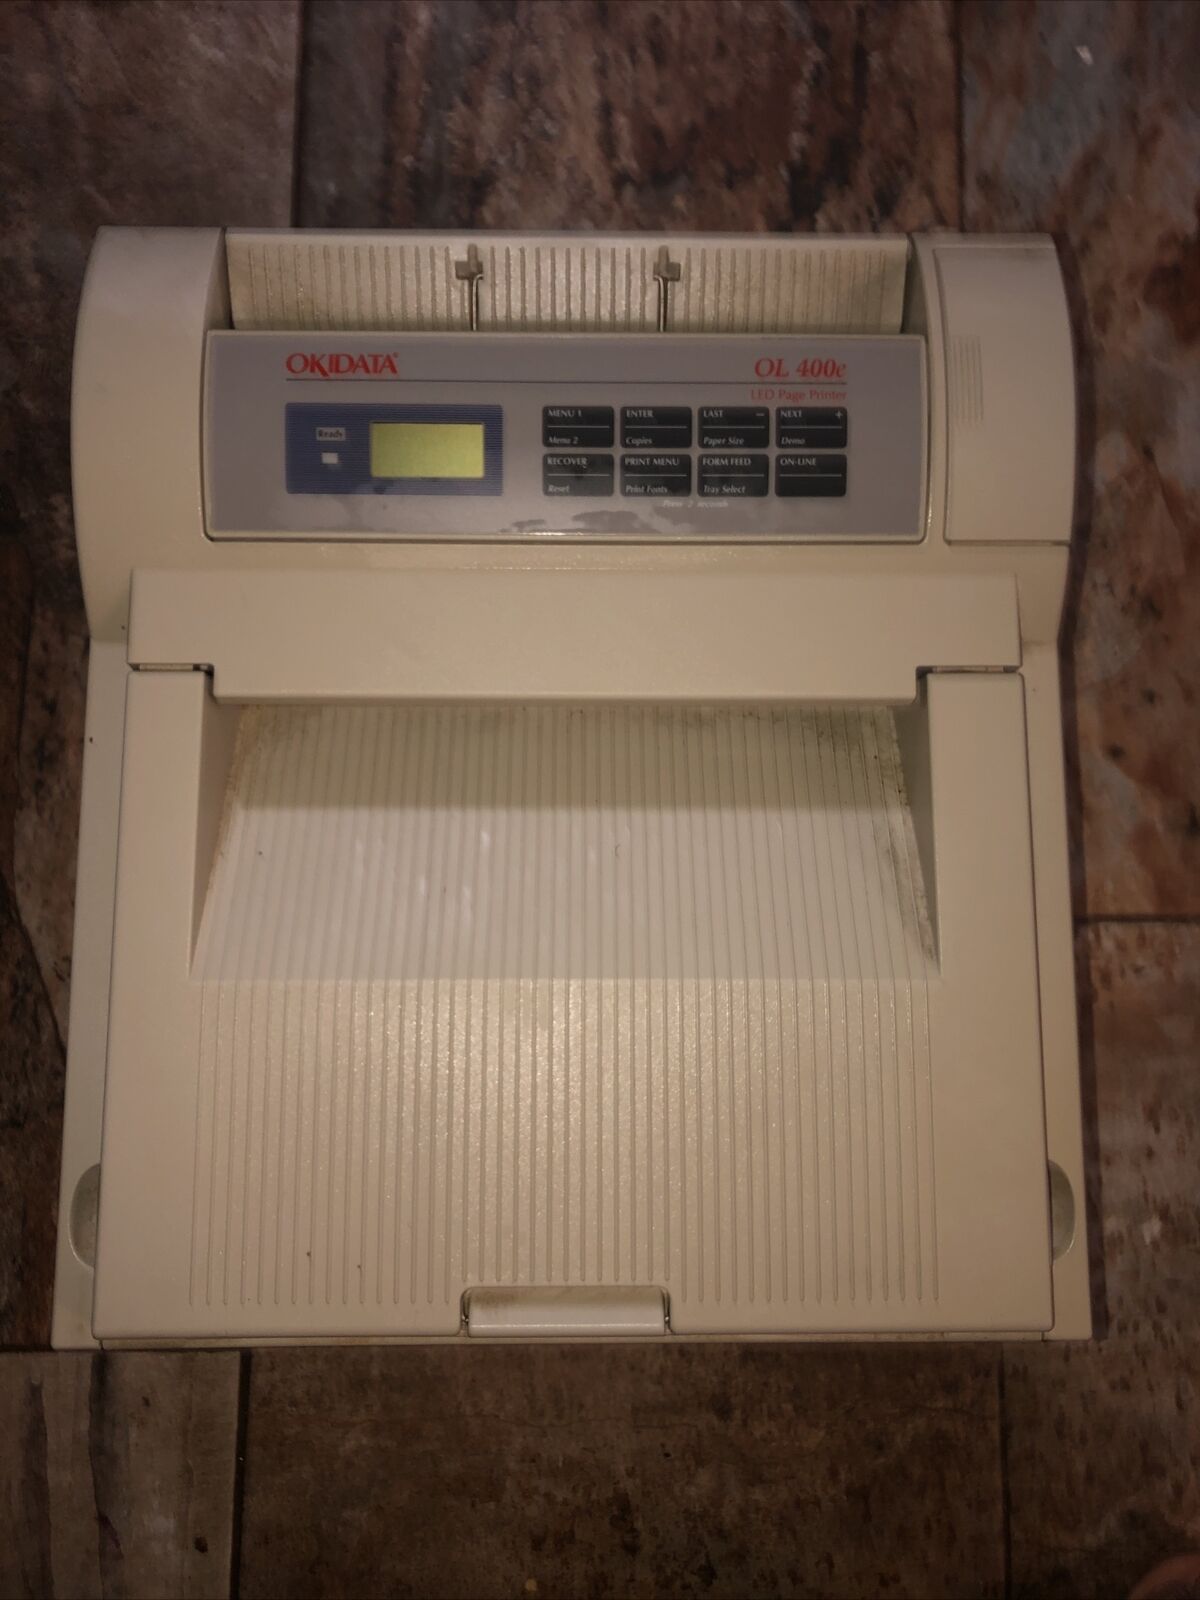 Vintage OKI Okidata OL400e Laser Printer - As-is Error 71